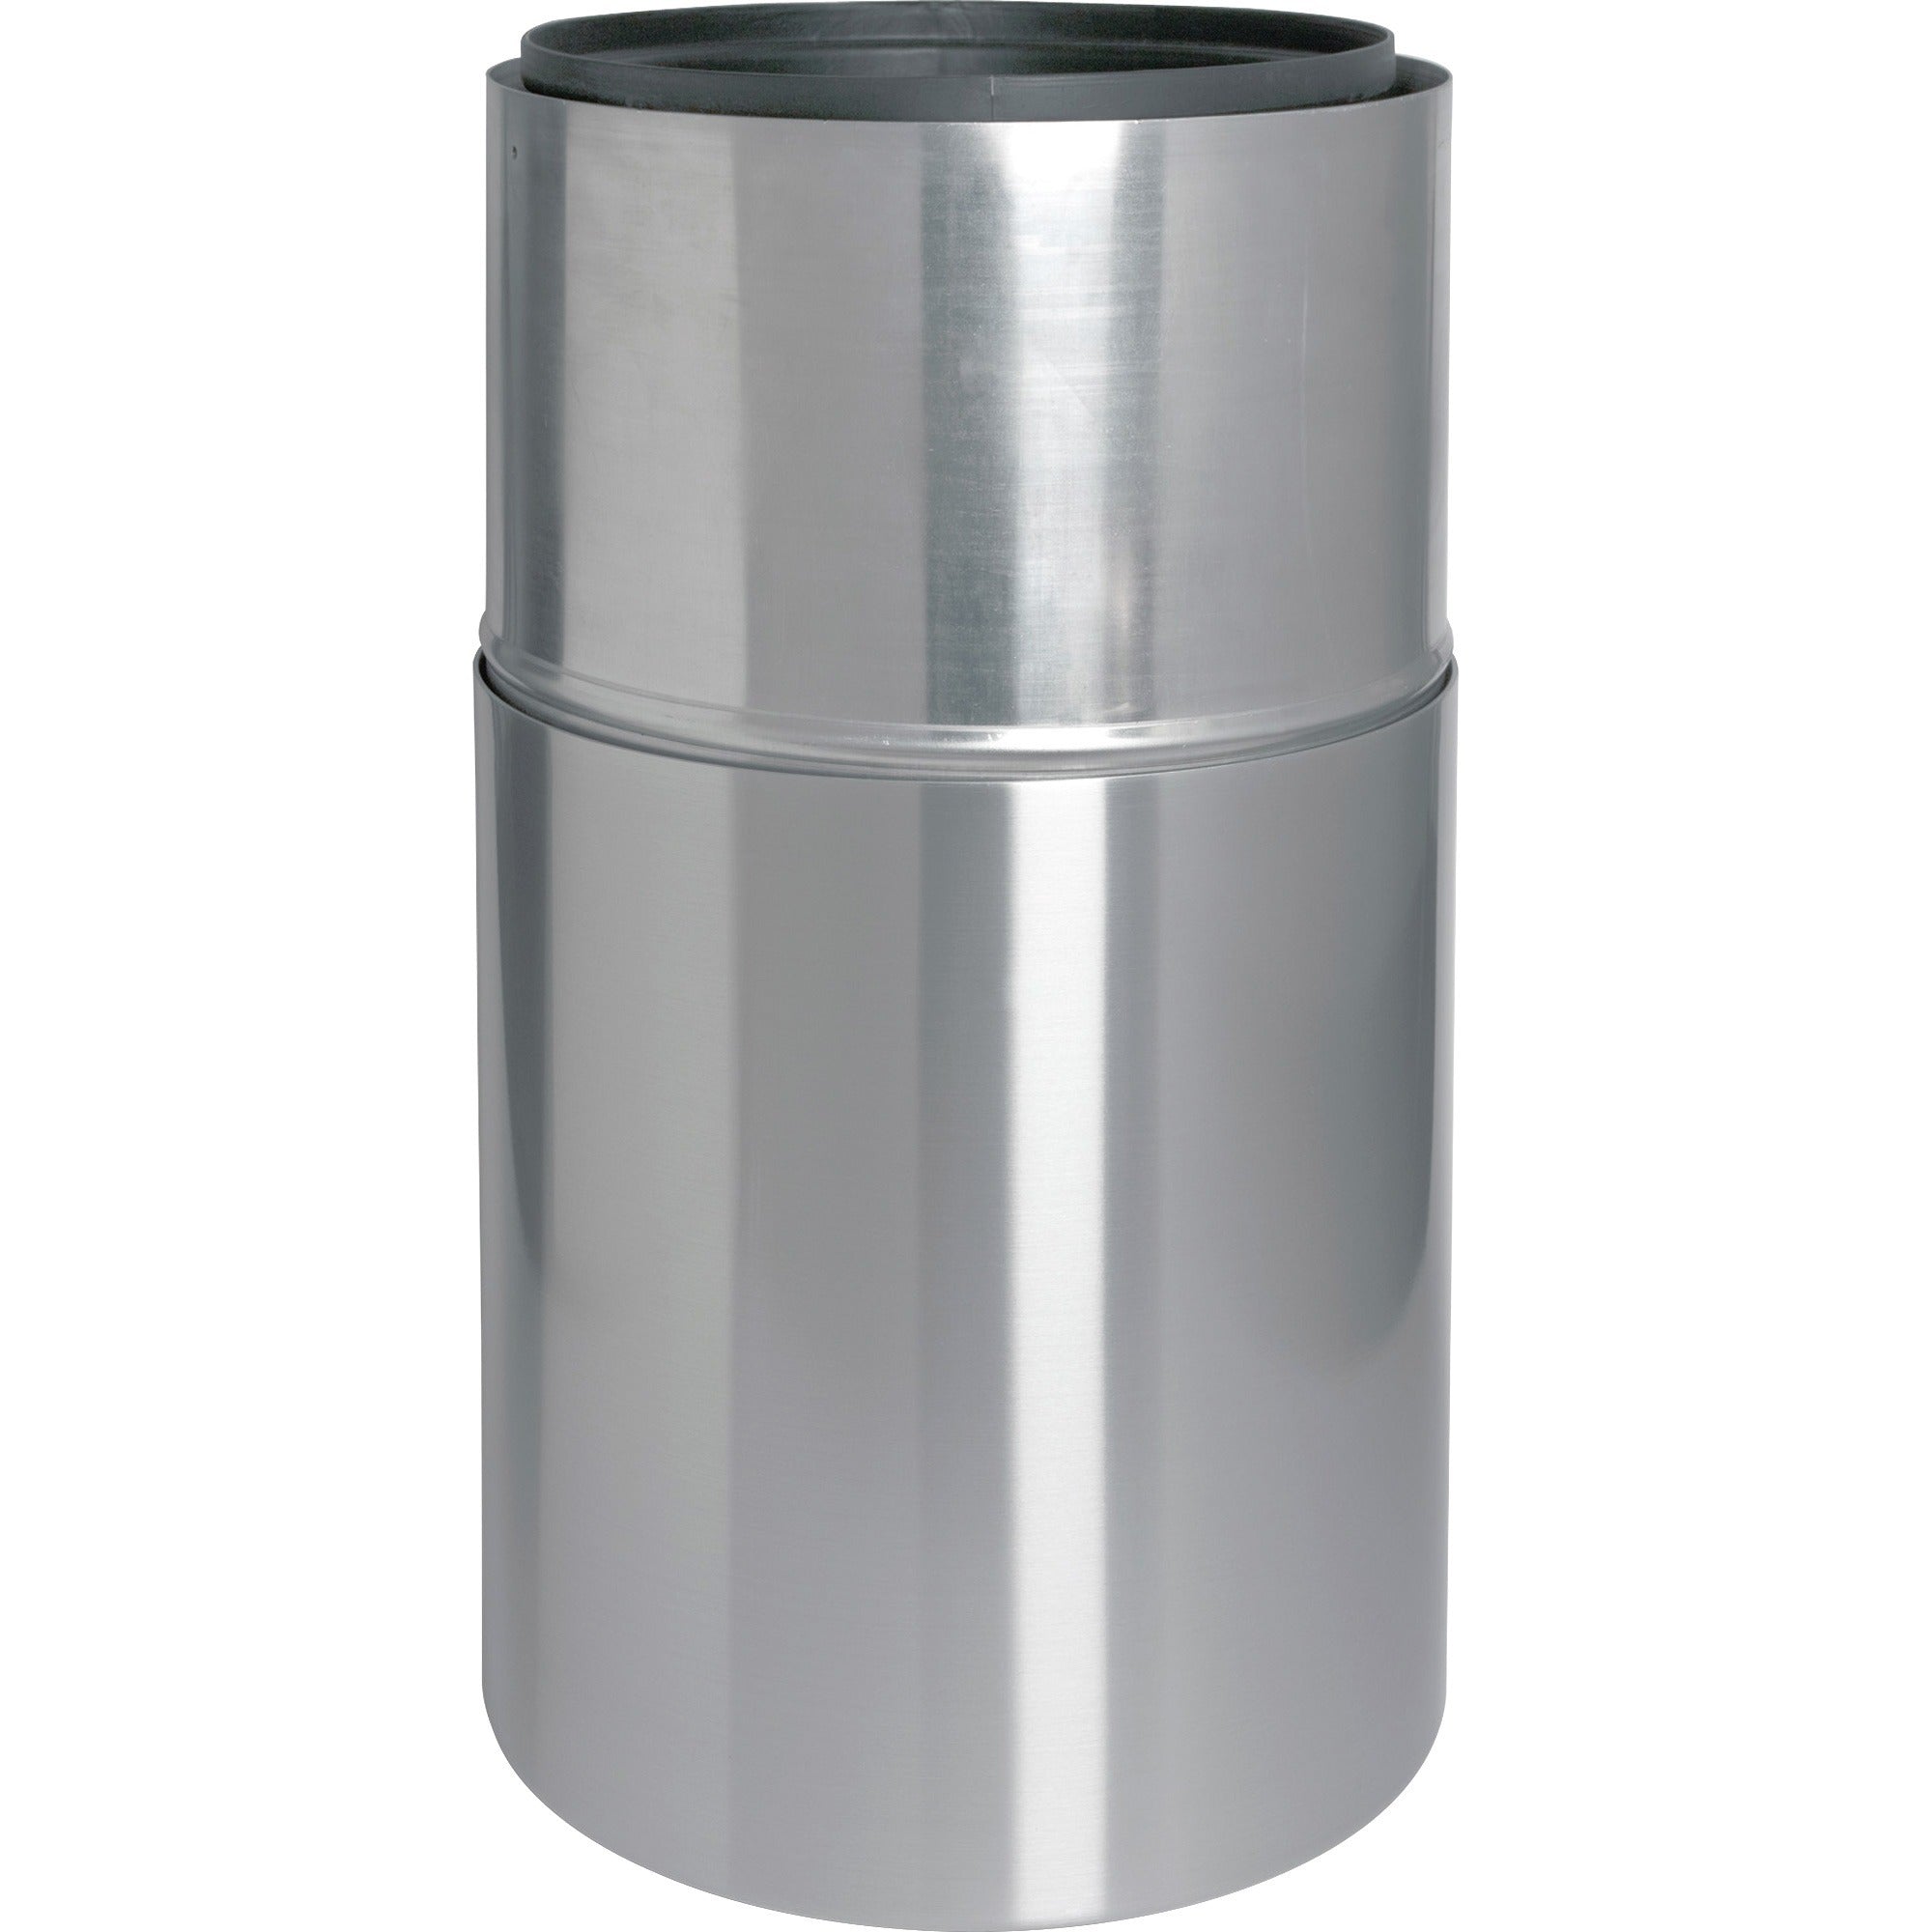 Genuine Joe Classic Cylinder 2-Piece Waste Receptacle - 35 gal Capacity - Weather Resistant, Fire Proof, Leak Proof - 34" Height x 18" Diameter - Aluminum - Silver - 1 Each - 